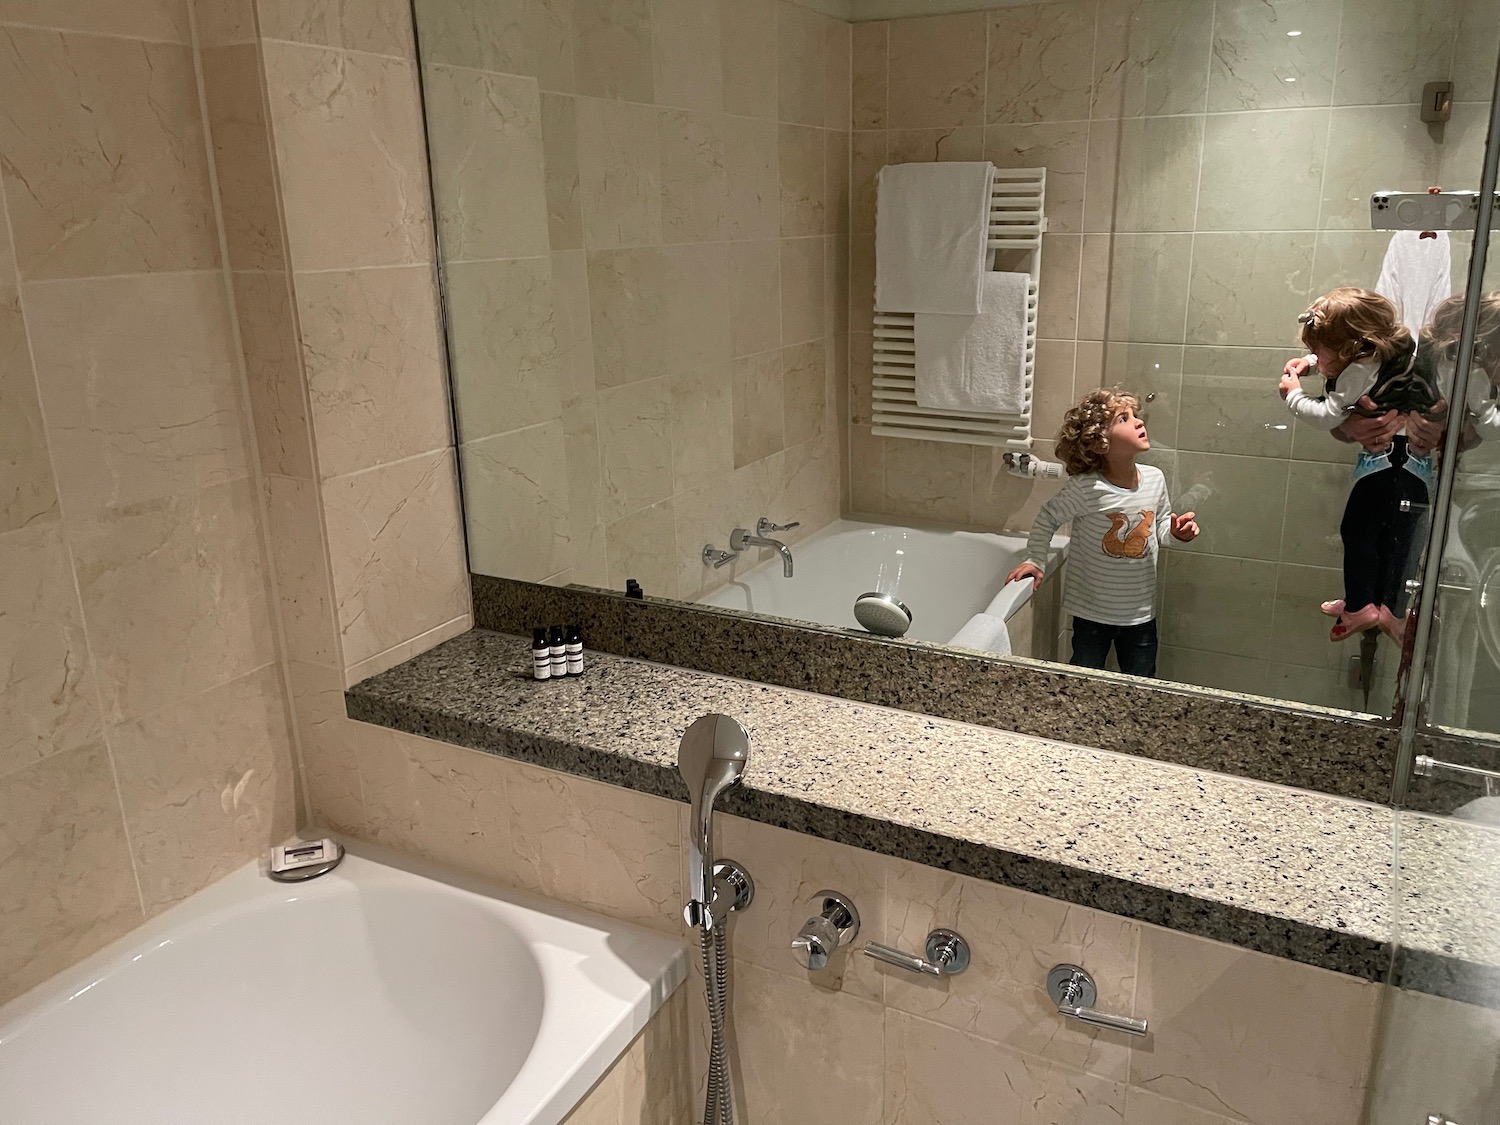 a boy taking a selfie in a bathroom